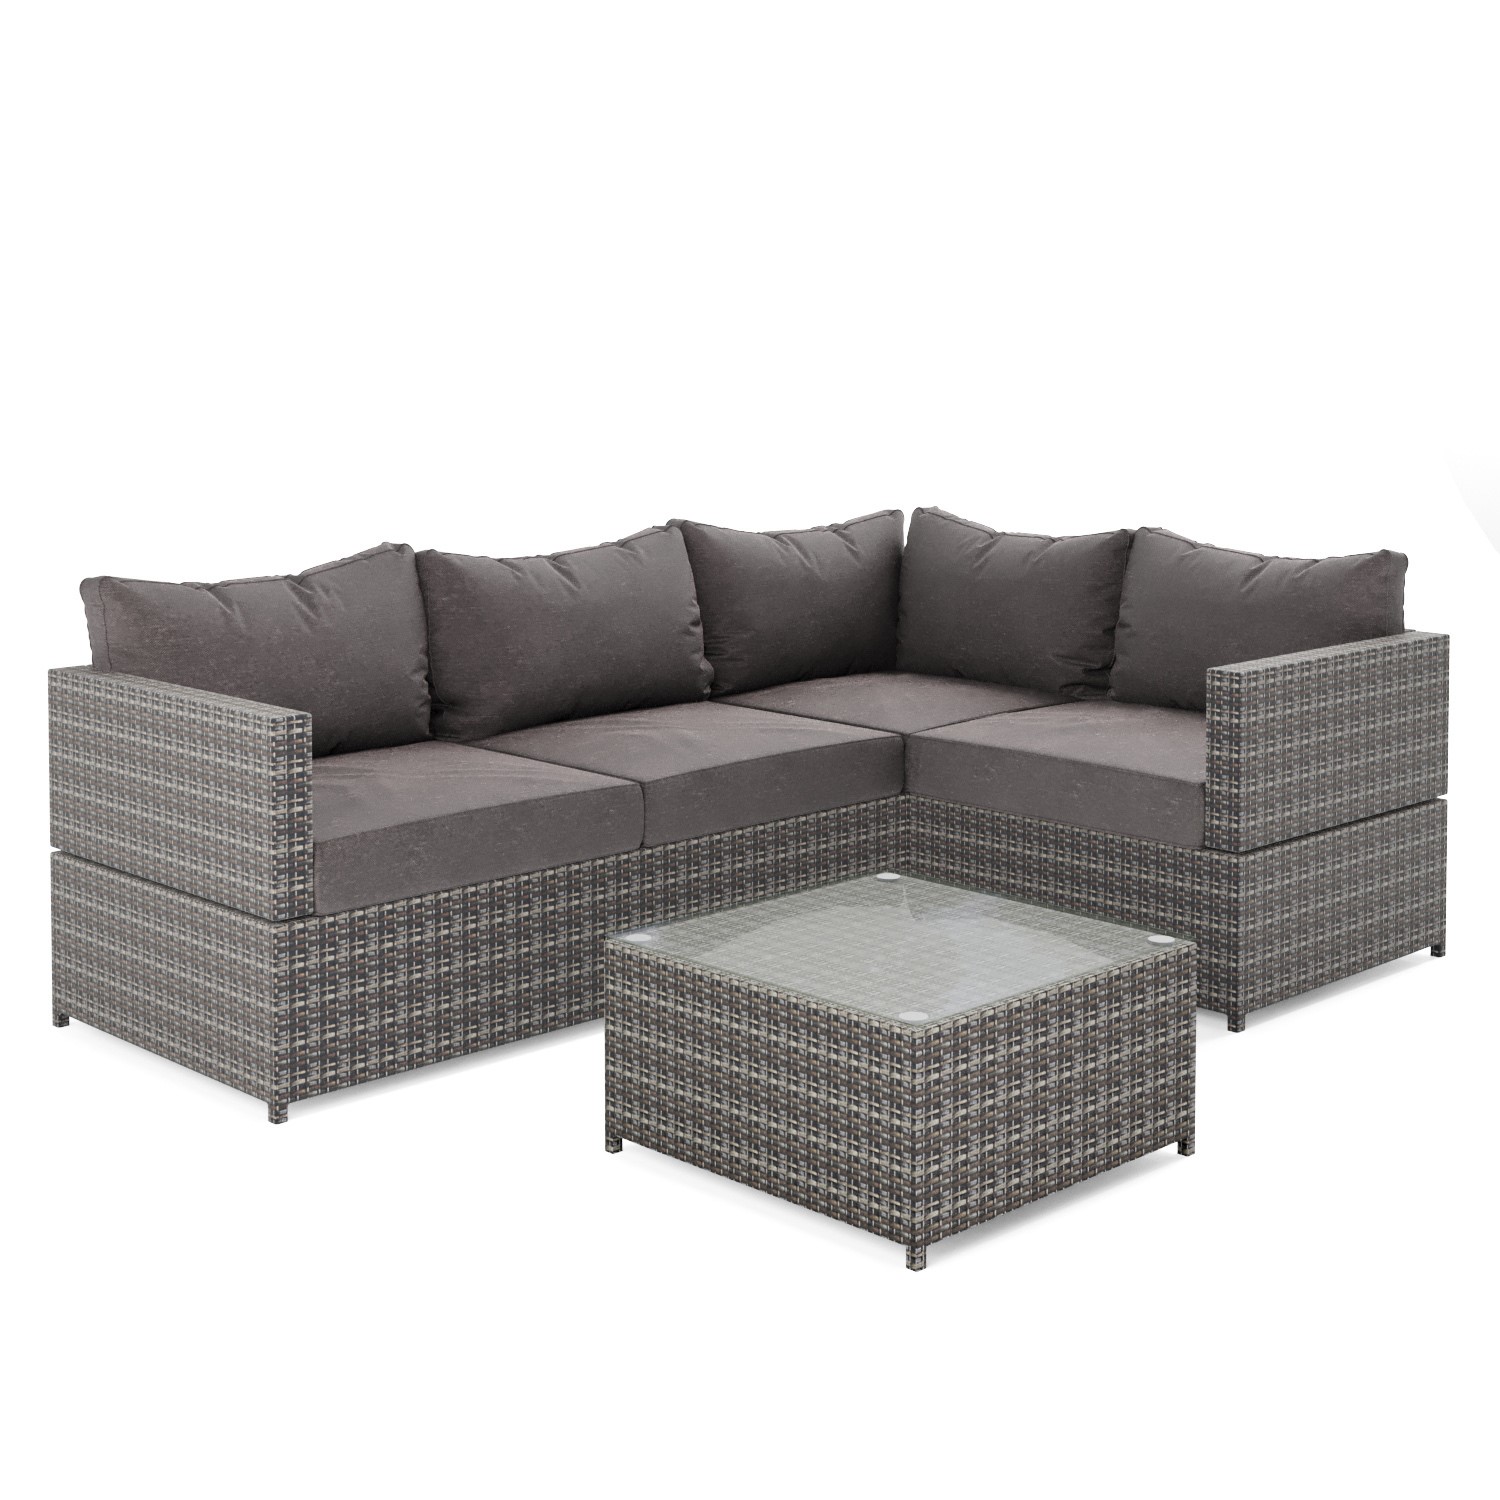 Read more about 4 seater grey rattan garden corner sofa set fortrose